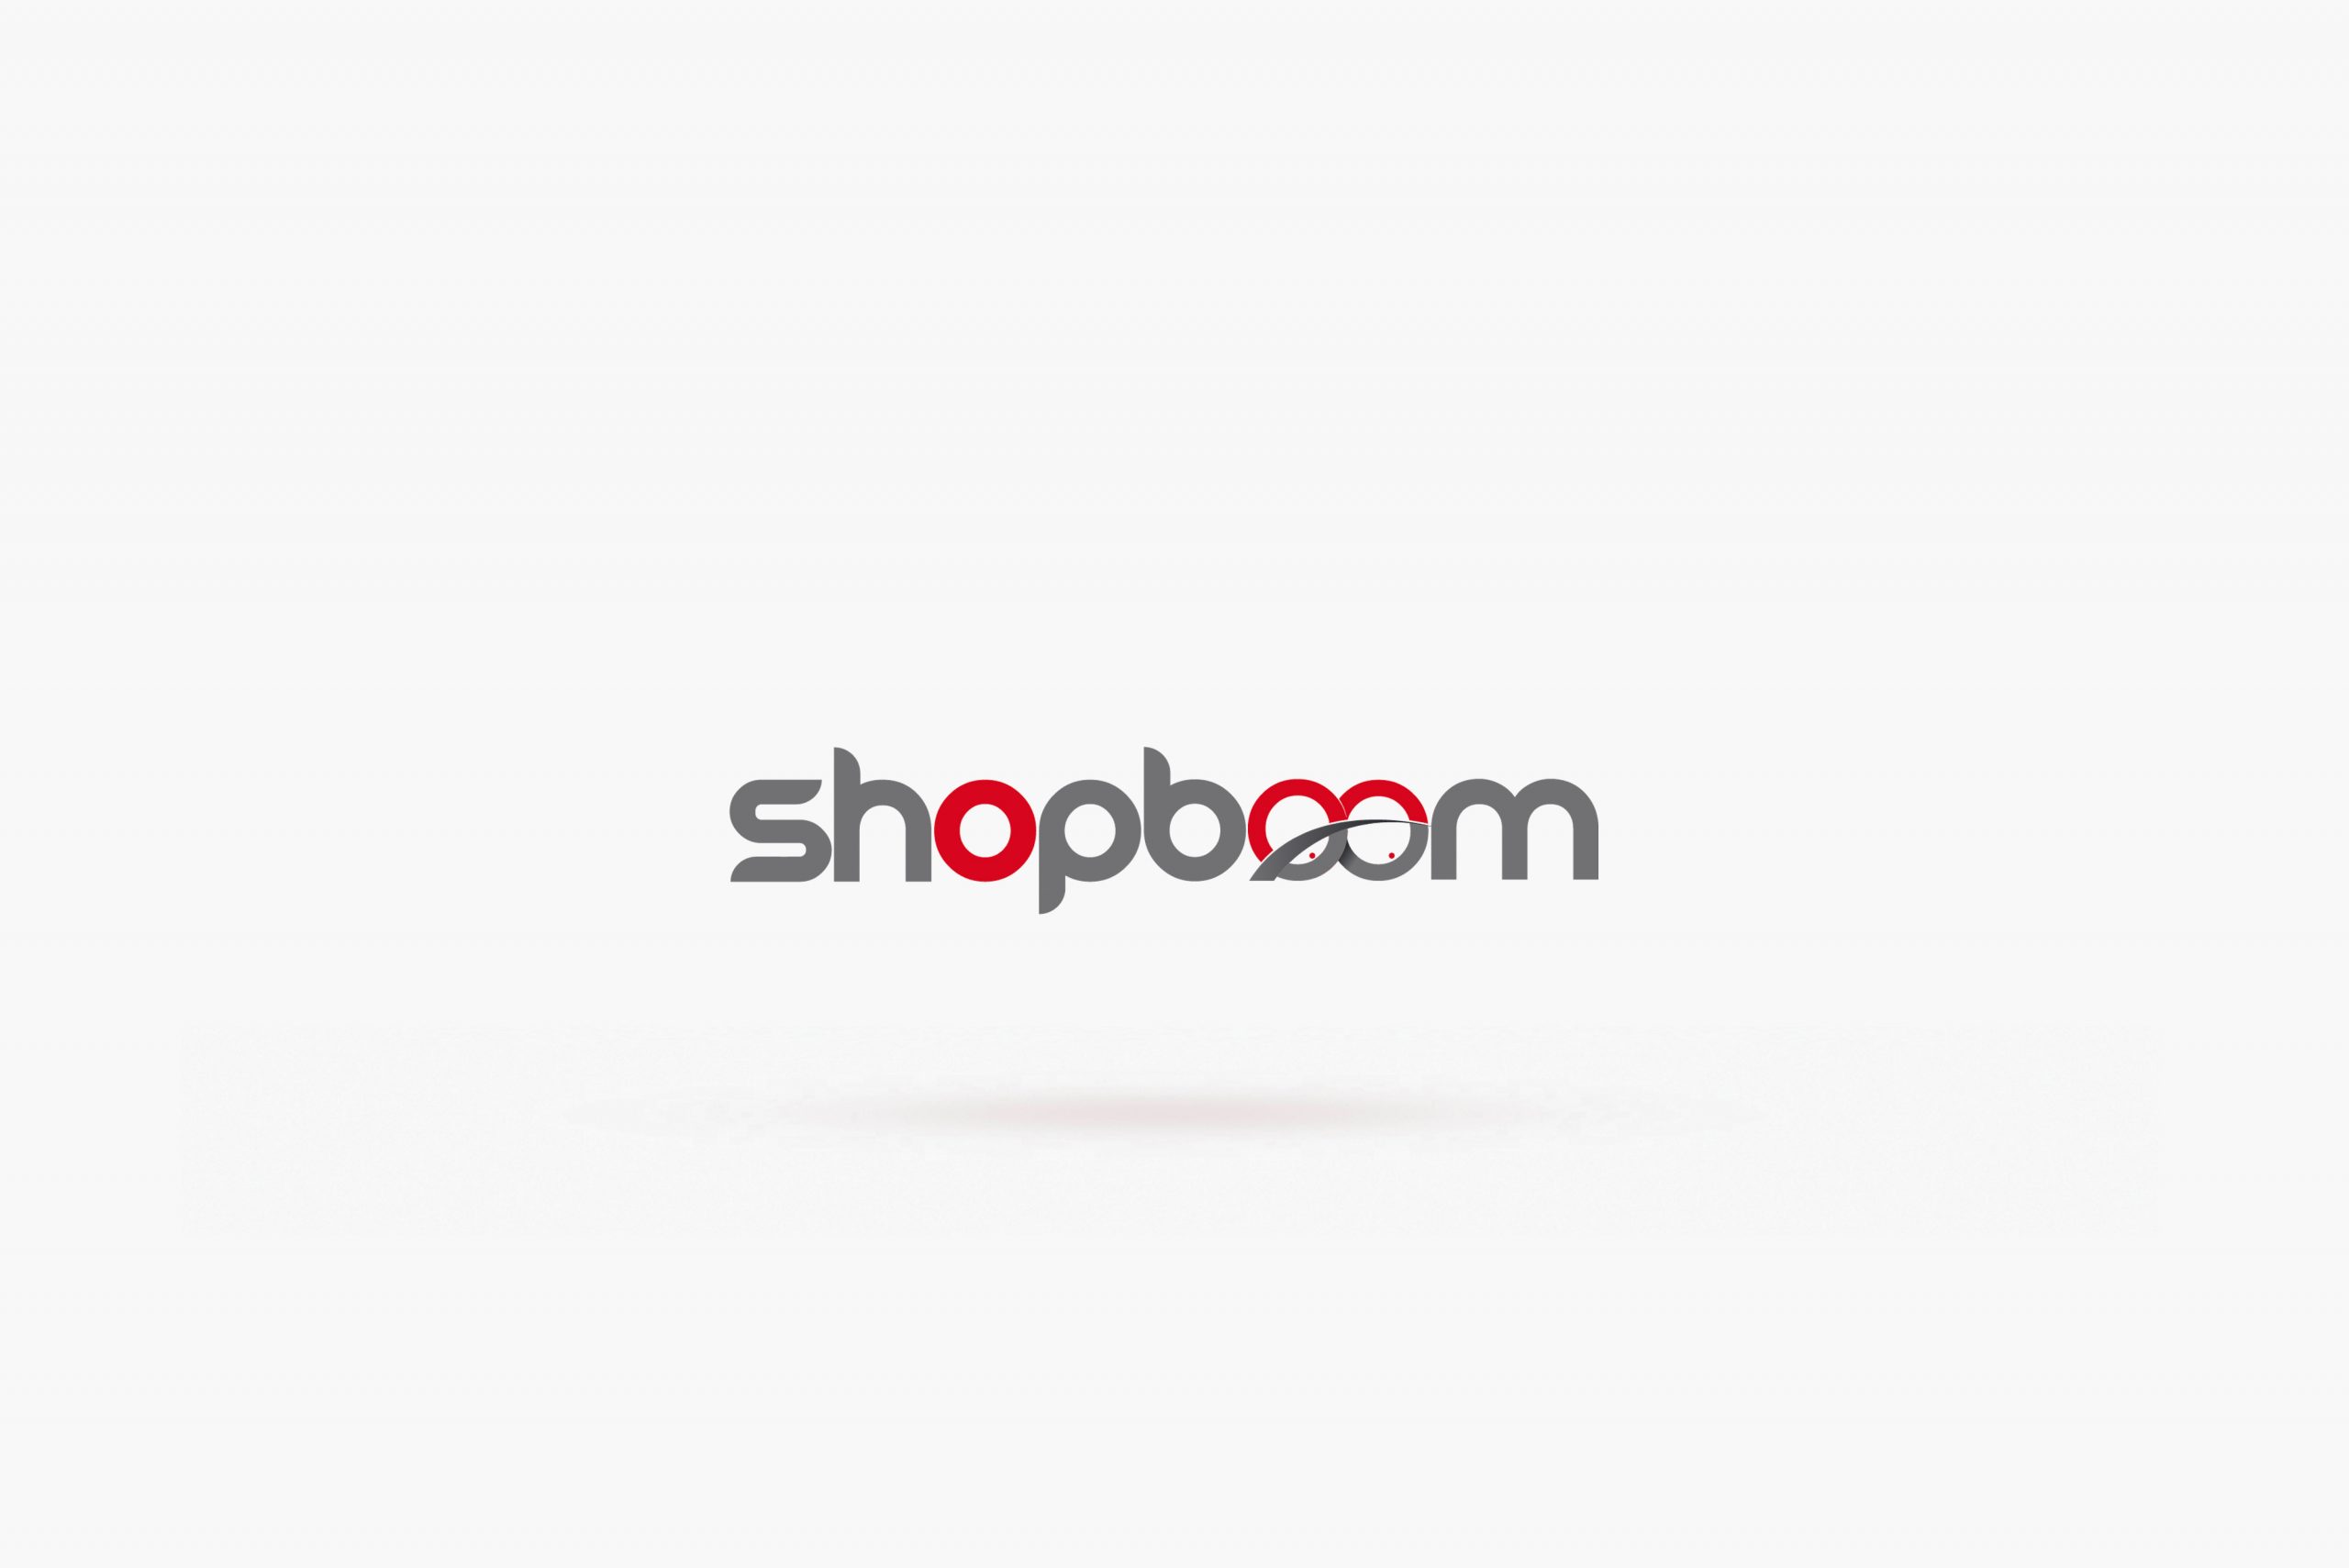 shopboom-logo